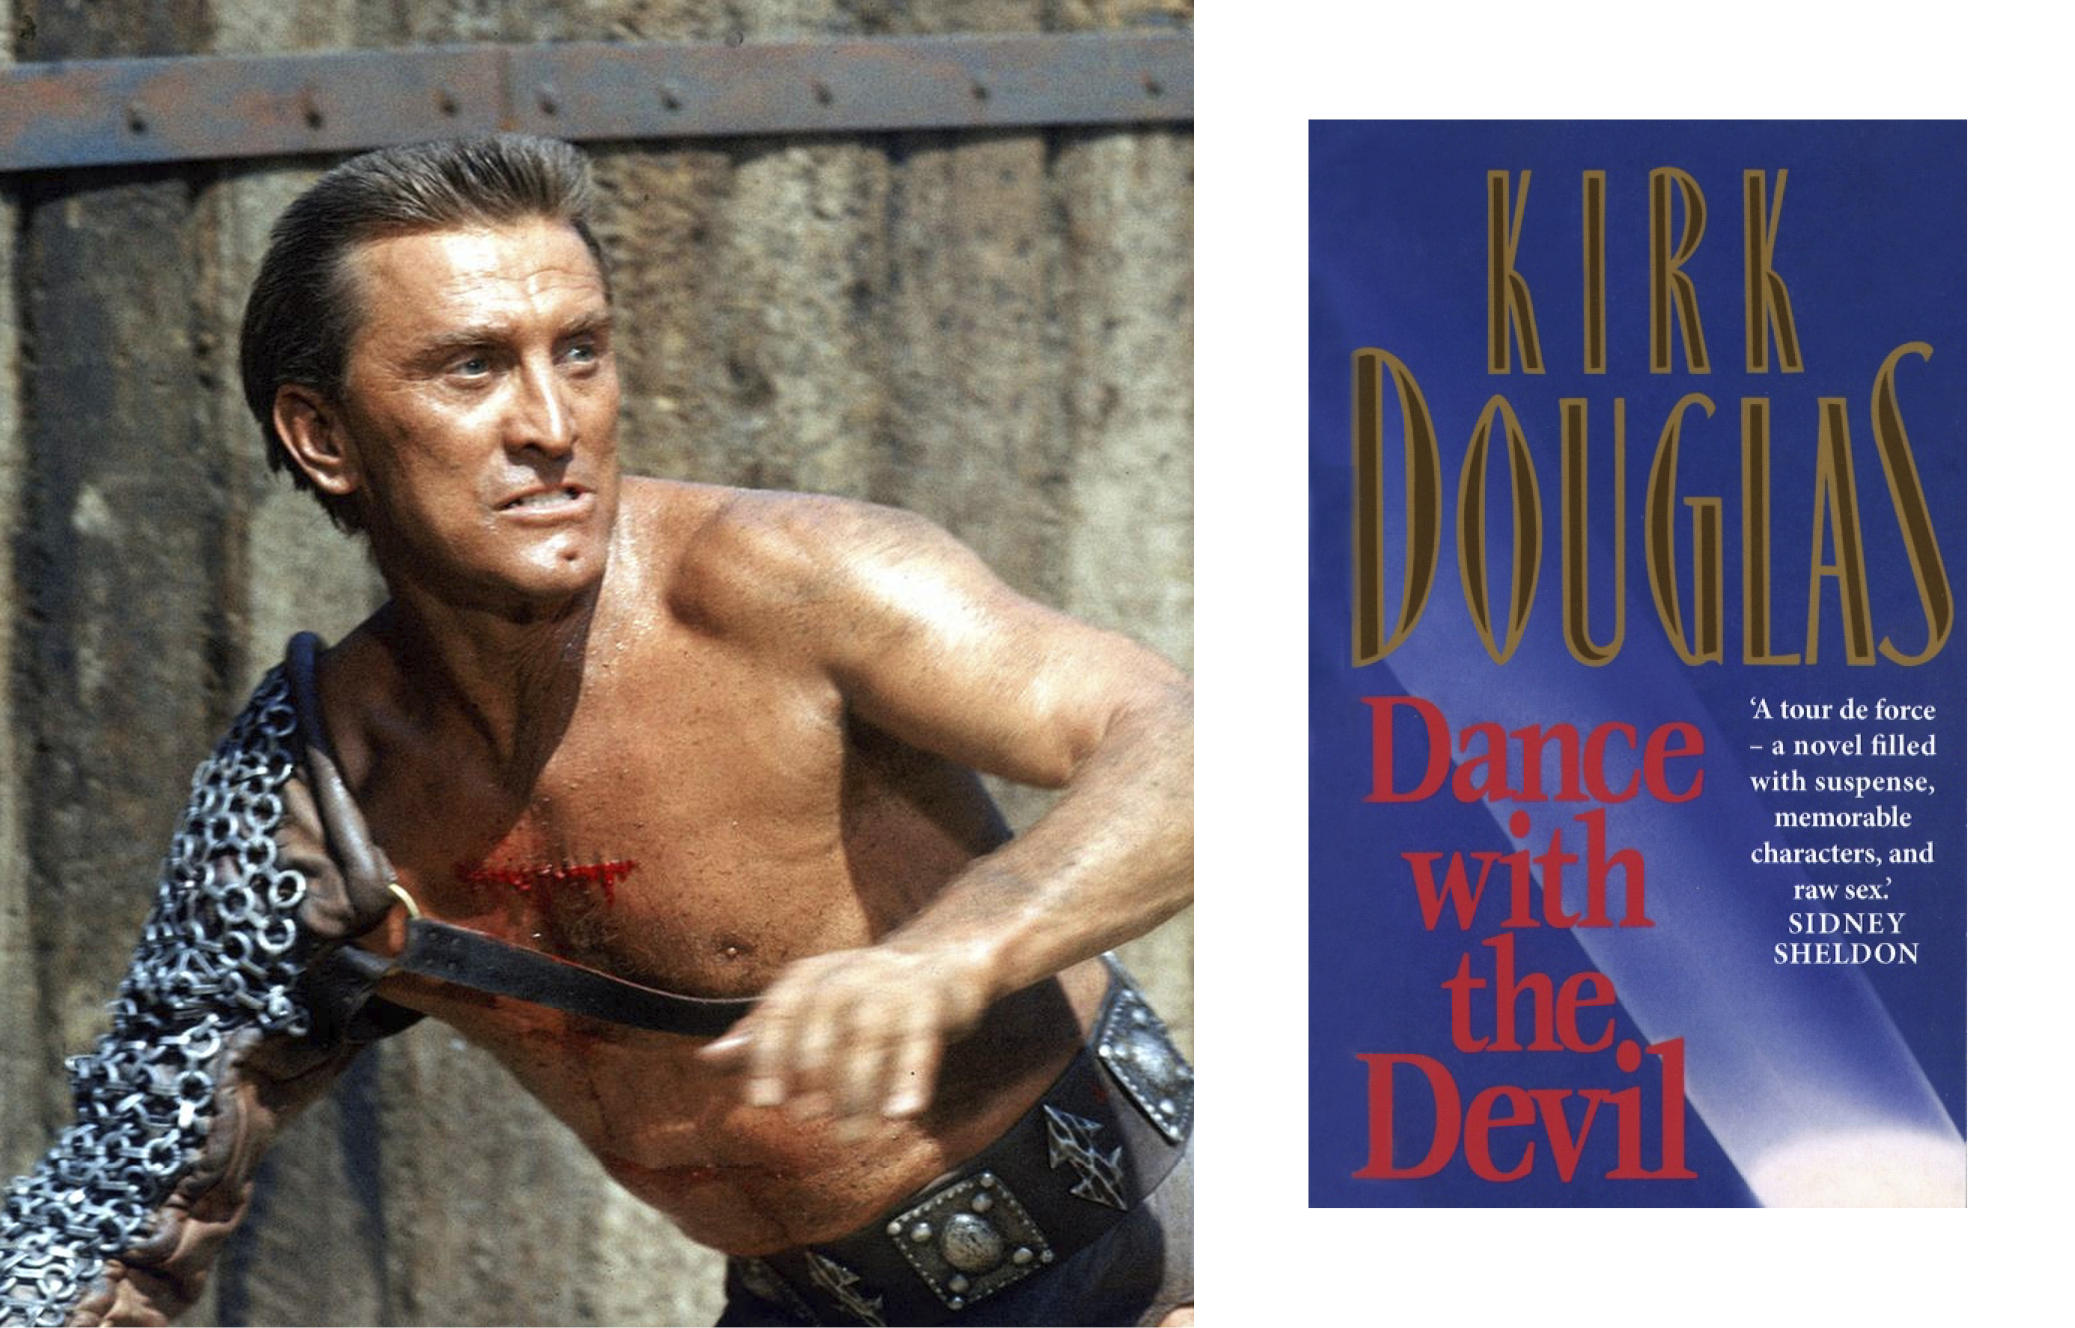 Kirk Douglas Dance With The Devil